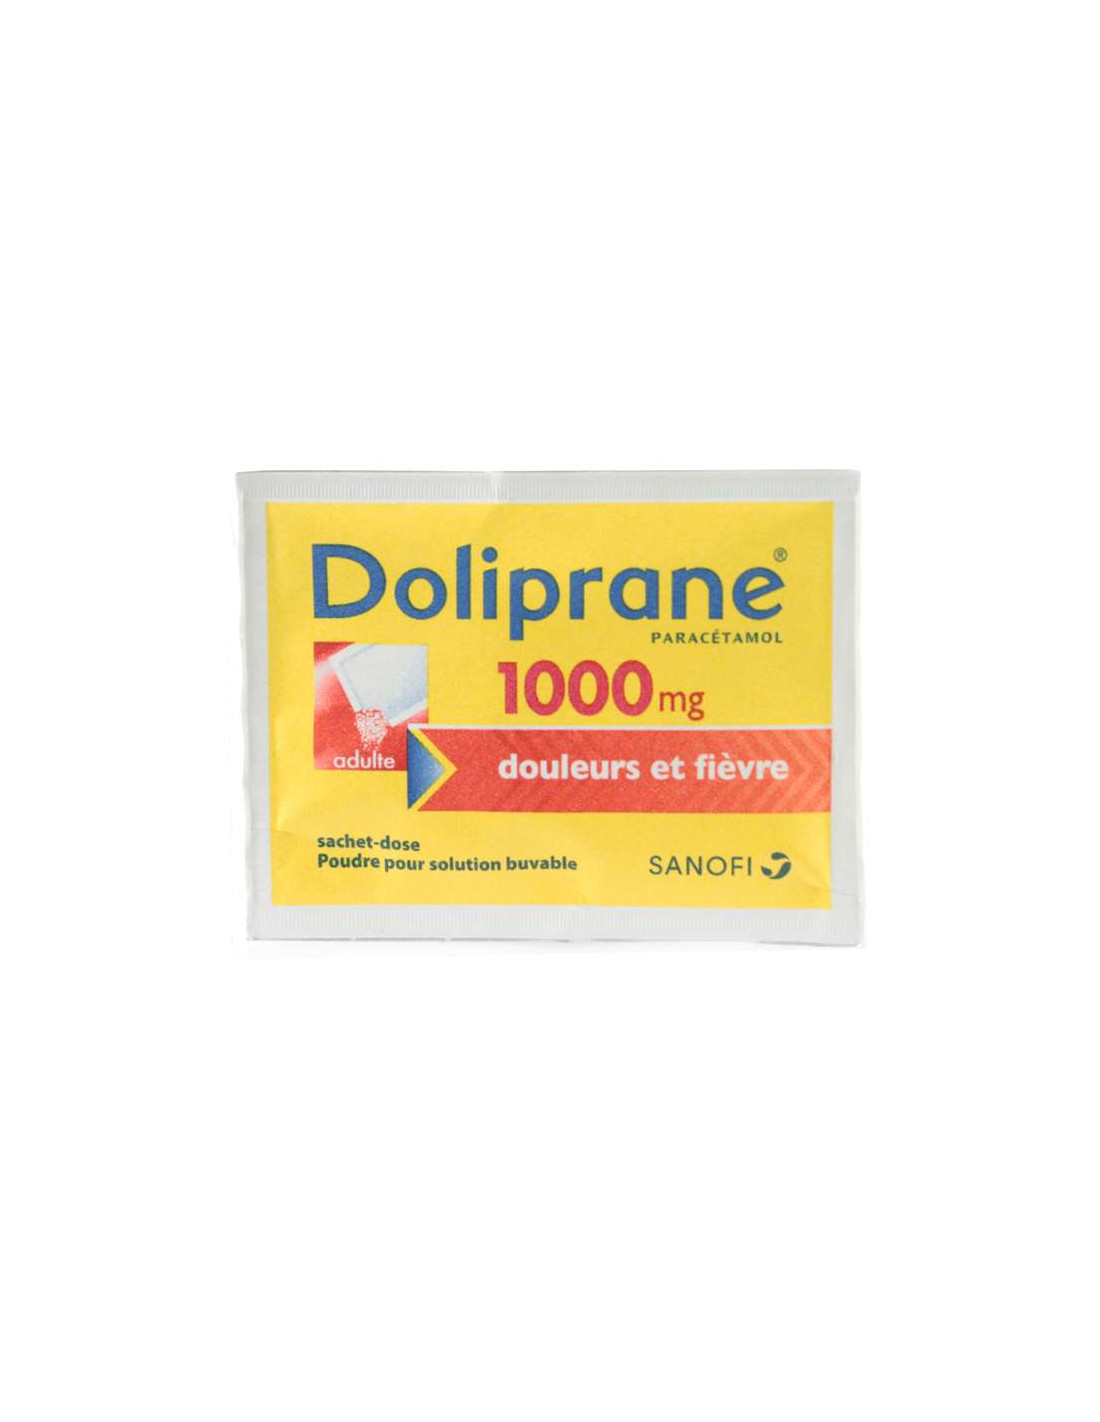 https://www.archange-pharma.com/15734-thickbox_default/doliprane-paracetamol-1000-mg-douleurs-fievre-8-sachets-dose-poudre.jpg